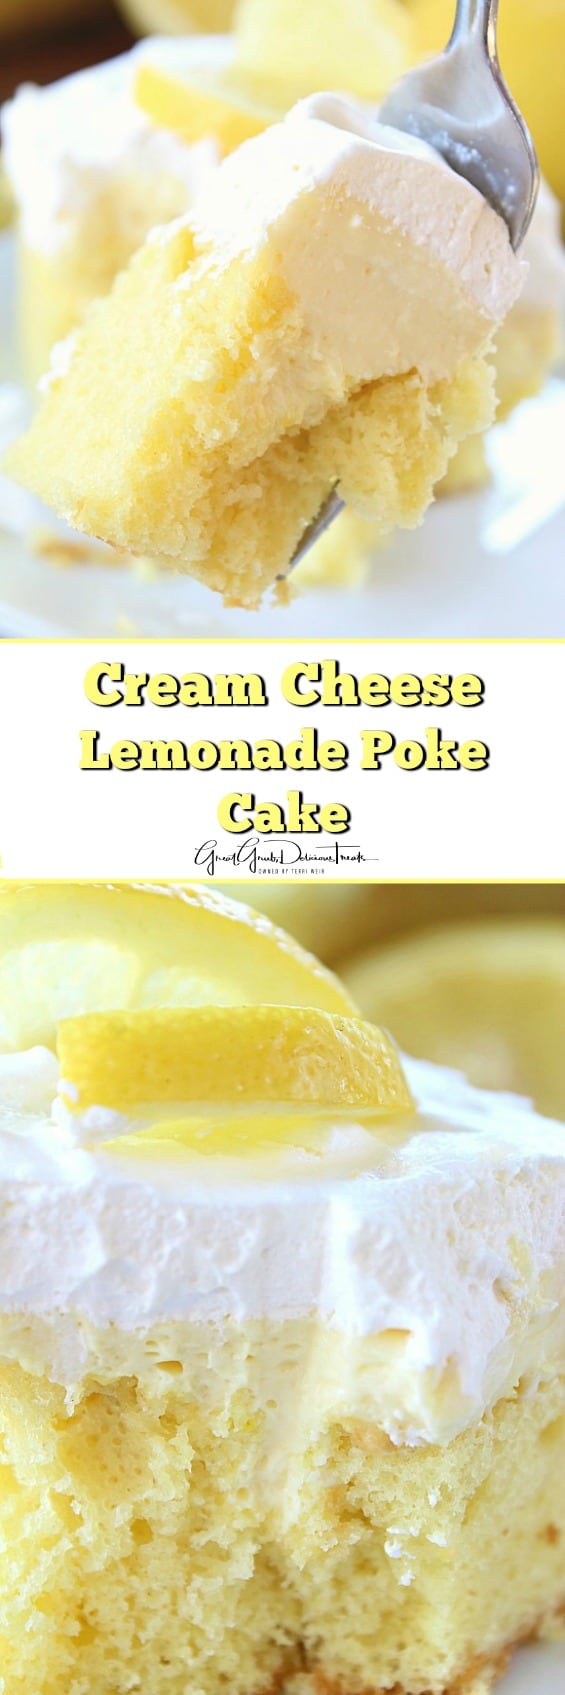 A close up of a serving of lemonade cream cheese poke cake.